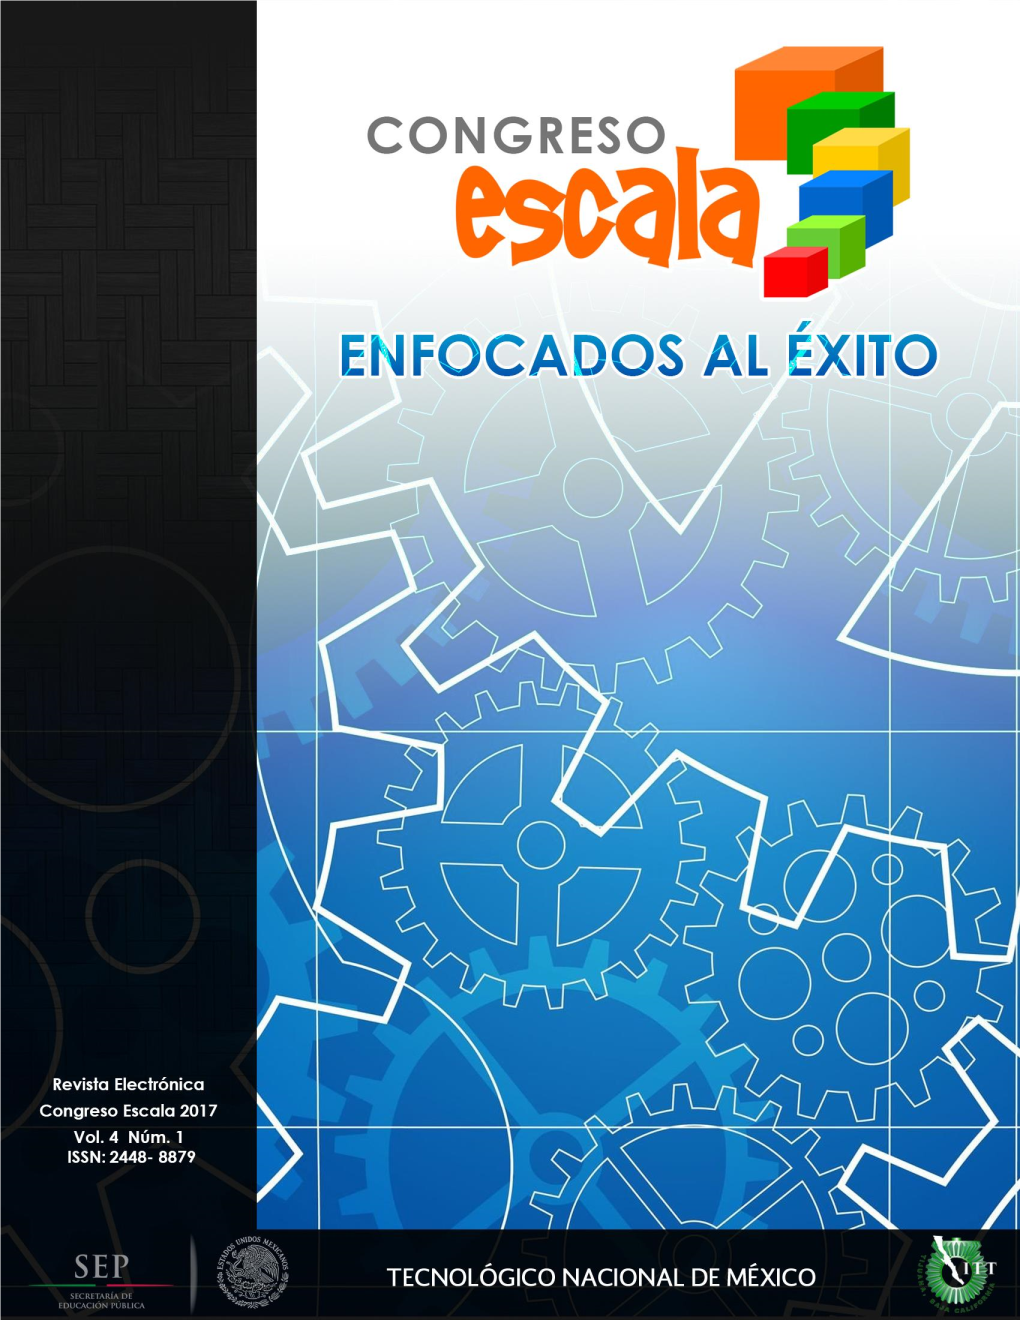 + Uy] Congreso Escala Revista Electrónica 2017 Congreso Escala, Volumen 4, Número 1, Enero 2018 ISSN: 2448-8879